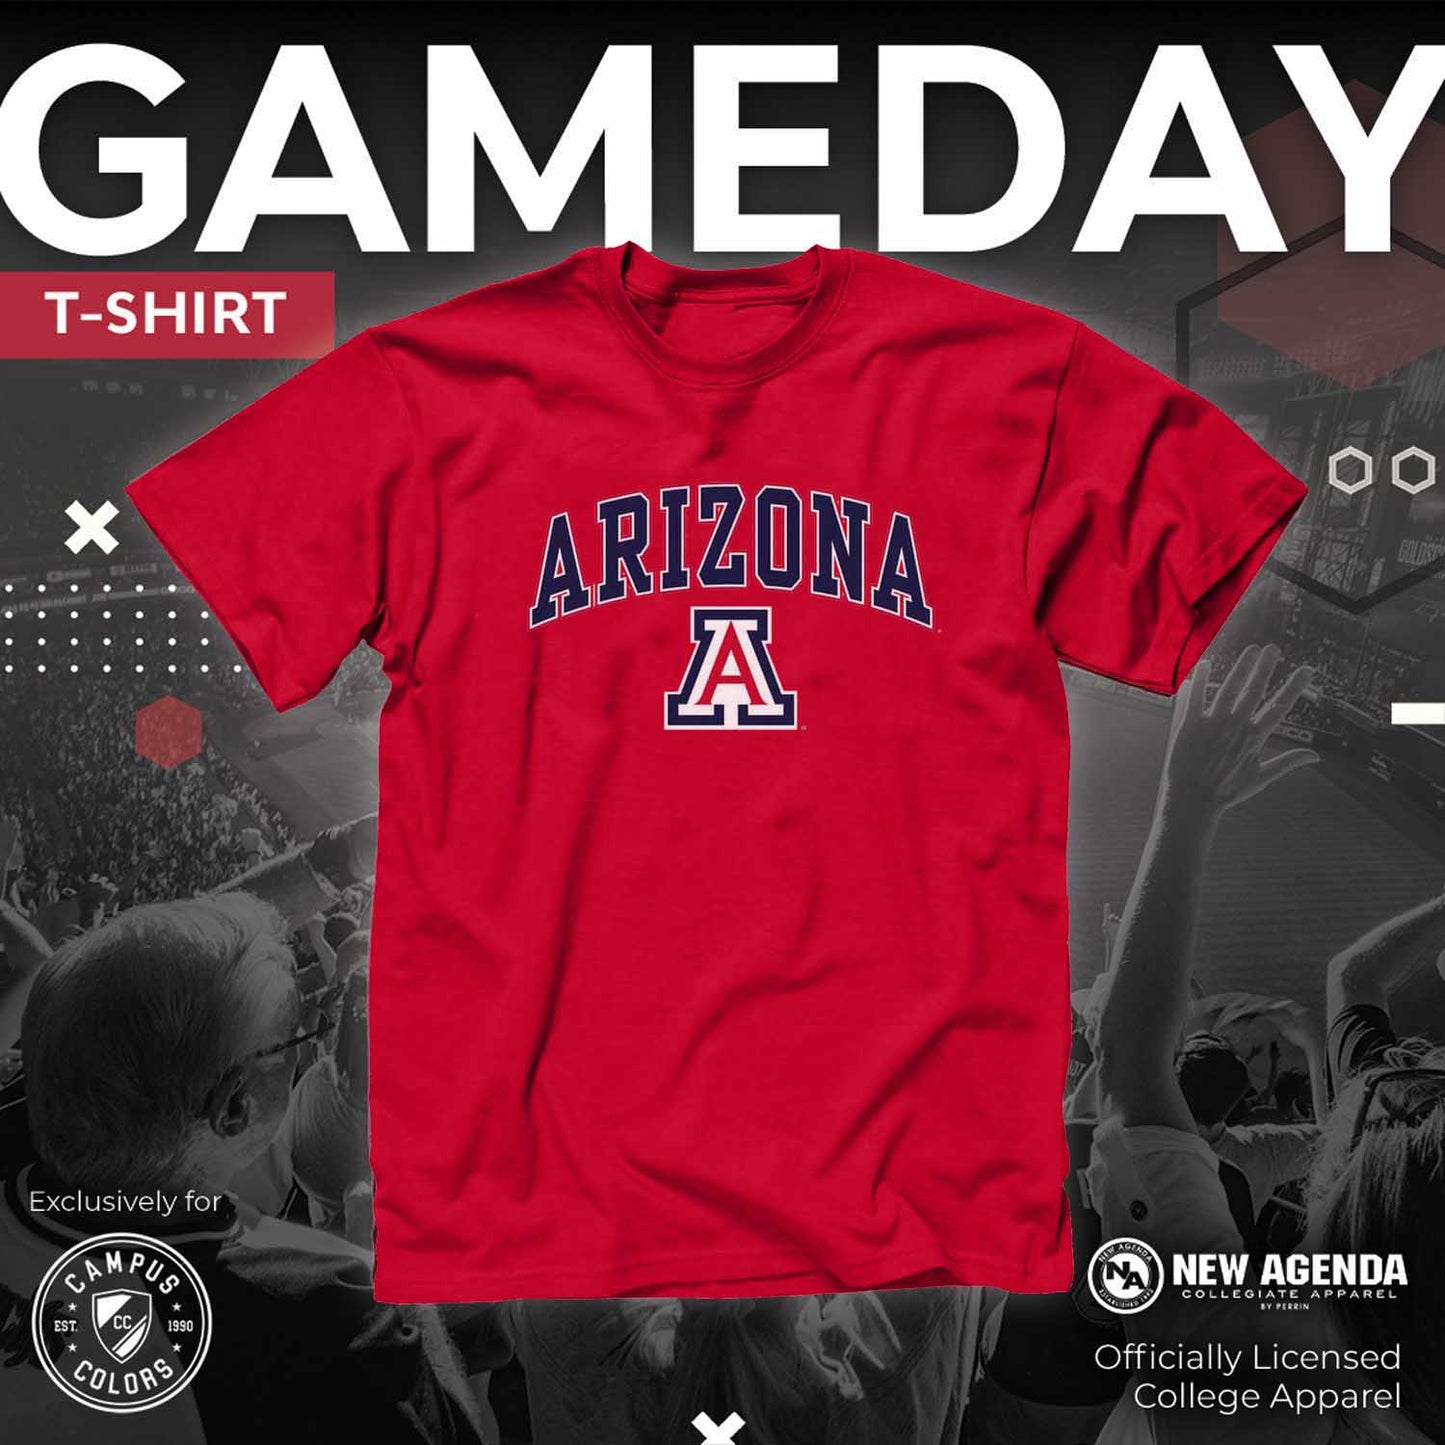 Arizona Wildcats NCAA Adult Gameday Cotton T-Shirt - Red